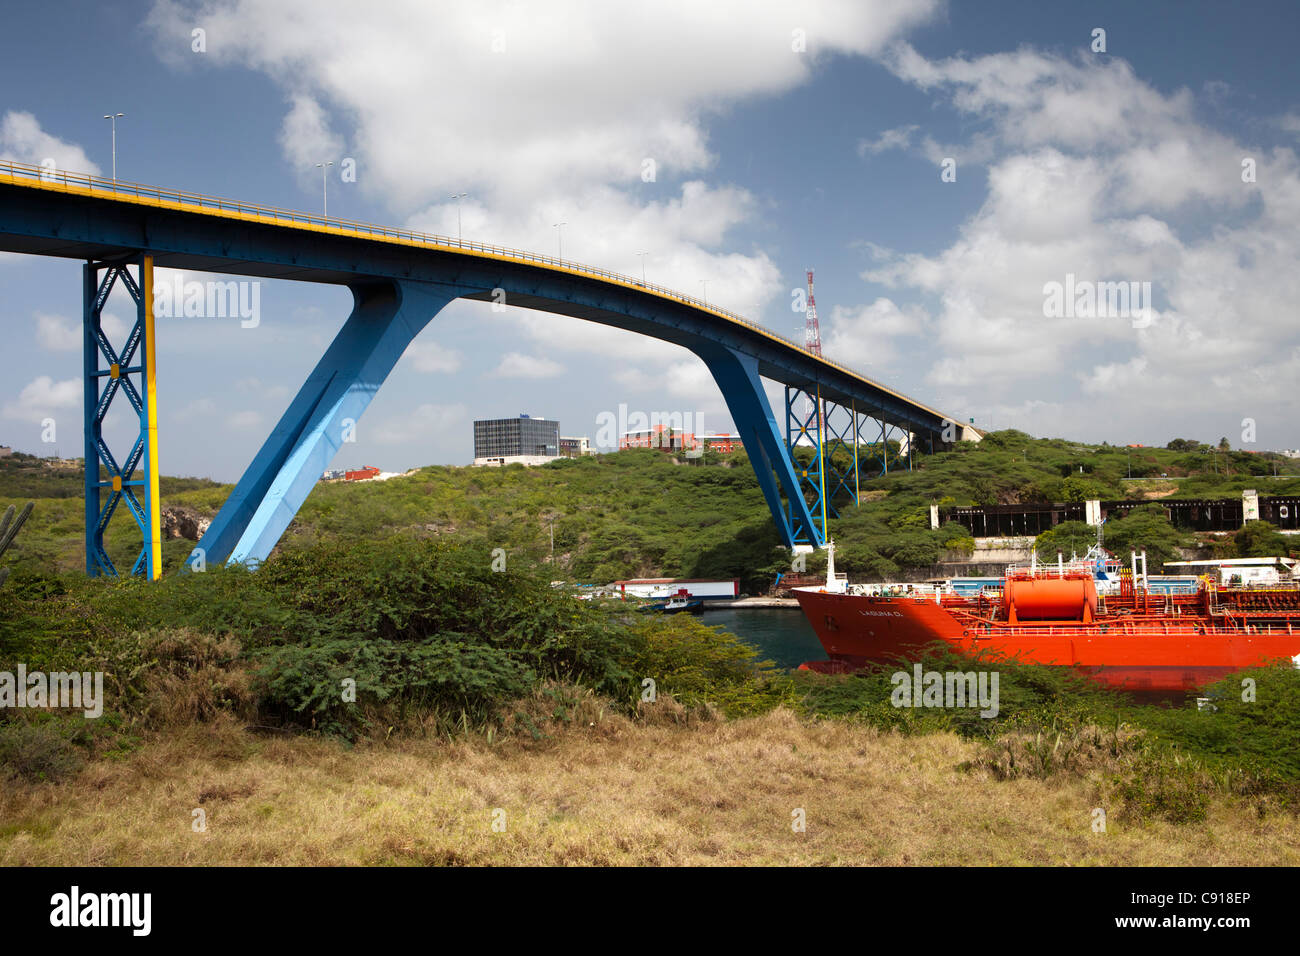 Curaçao, Karibik-Insel, unabhängig von den Niederlanden seit 2010. Willemstad. Öl-Tanker Juliana Brücke. Stockfoto